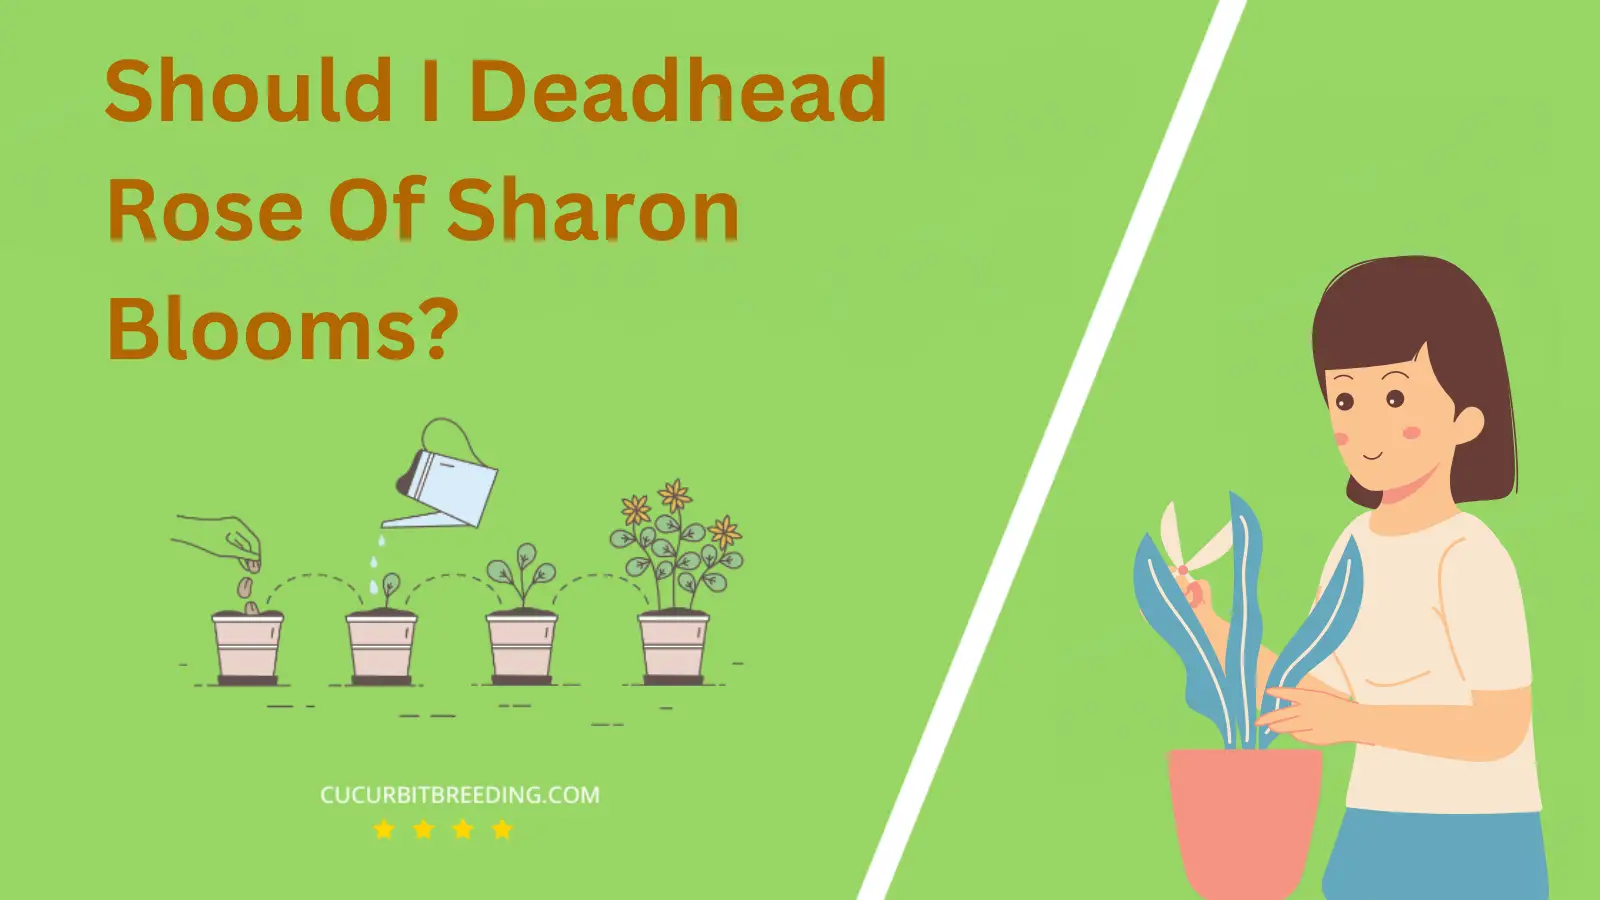 Should I Deadhead Rose Of Sharon Blooms?